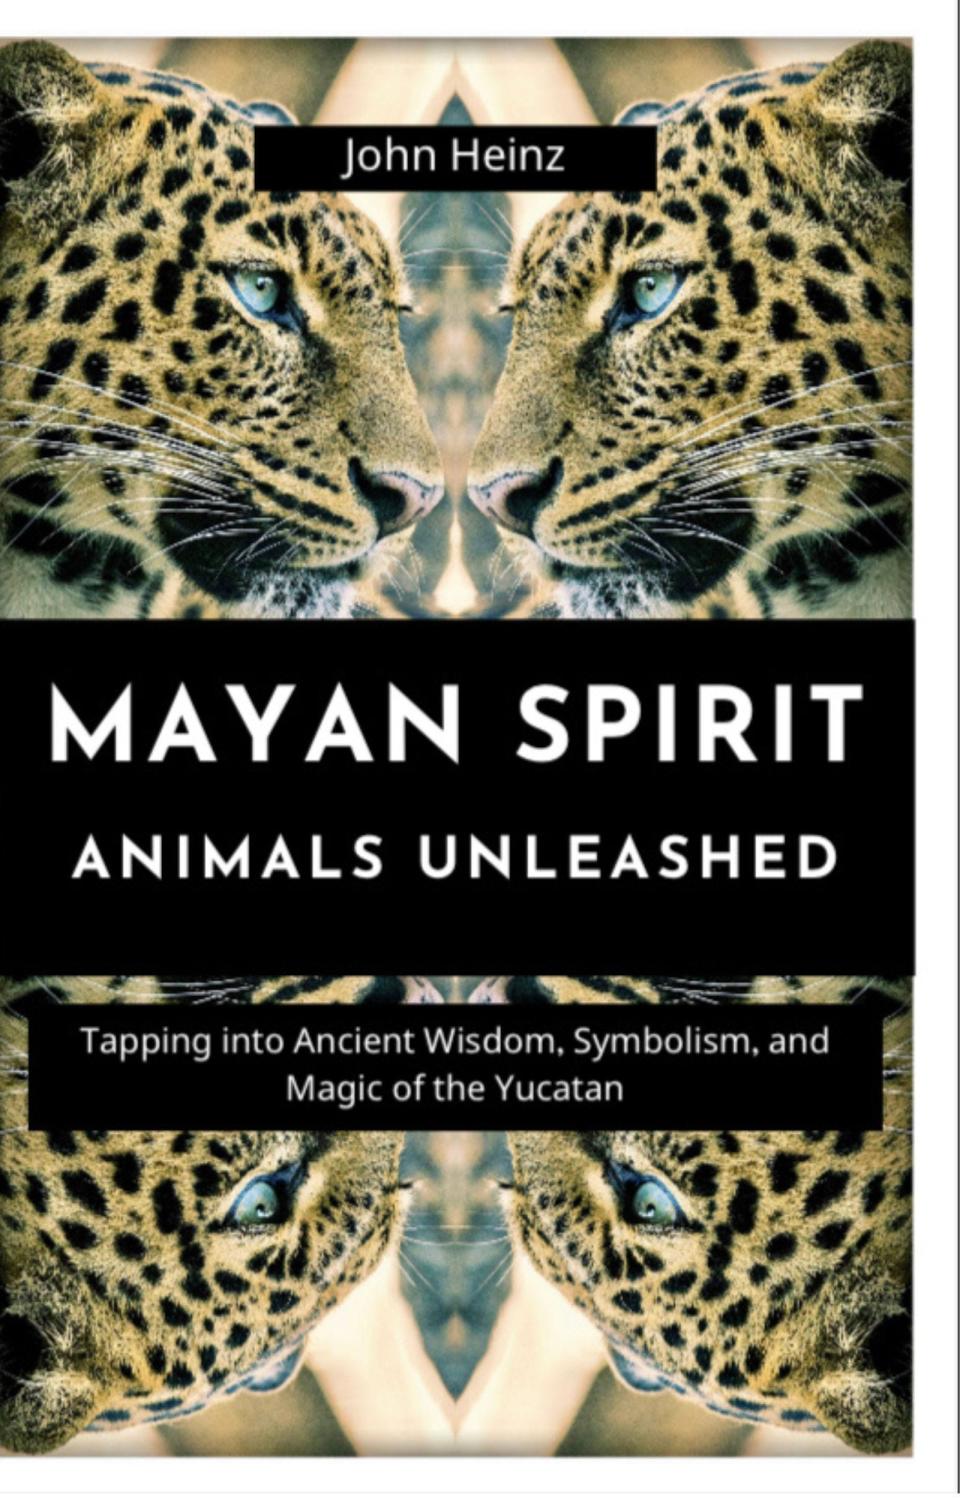 The book "Mayan Spirit Animals Unleashed" by University of Vermont alum John Heinz